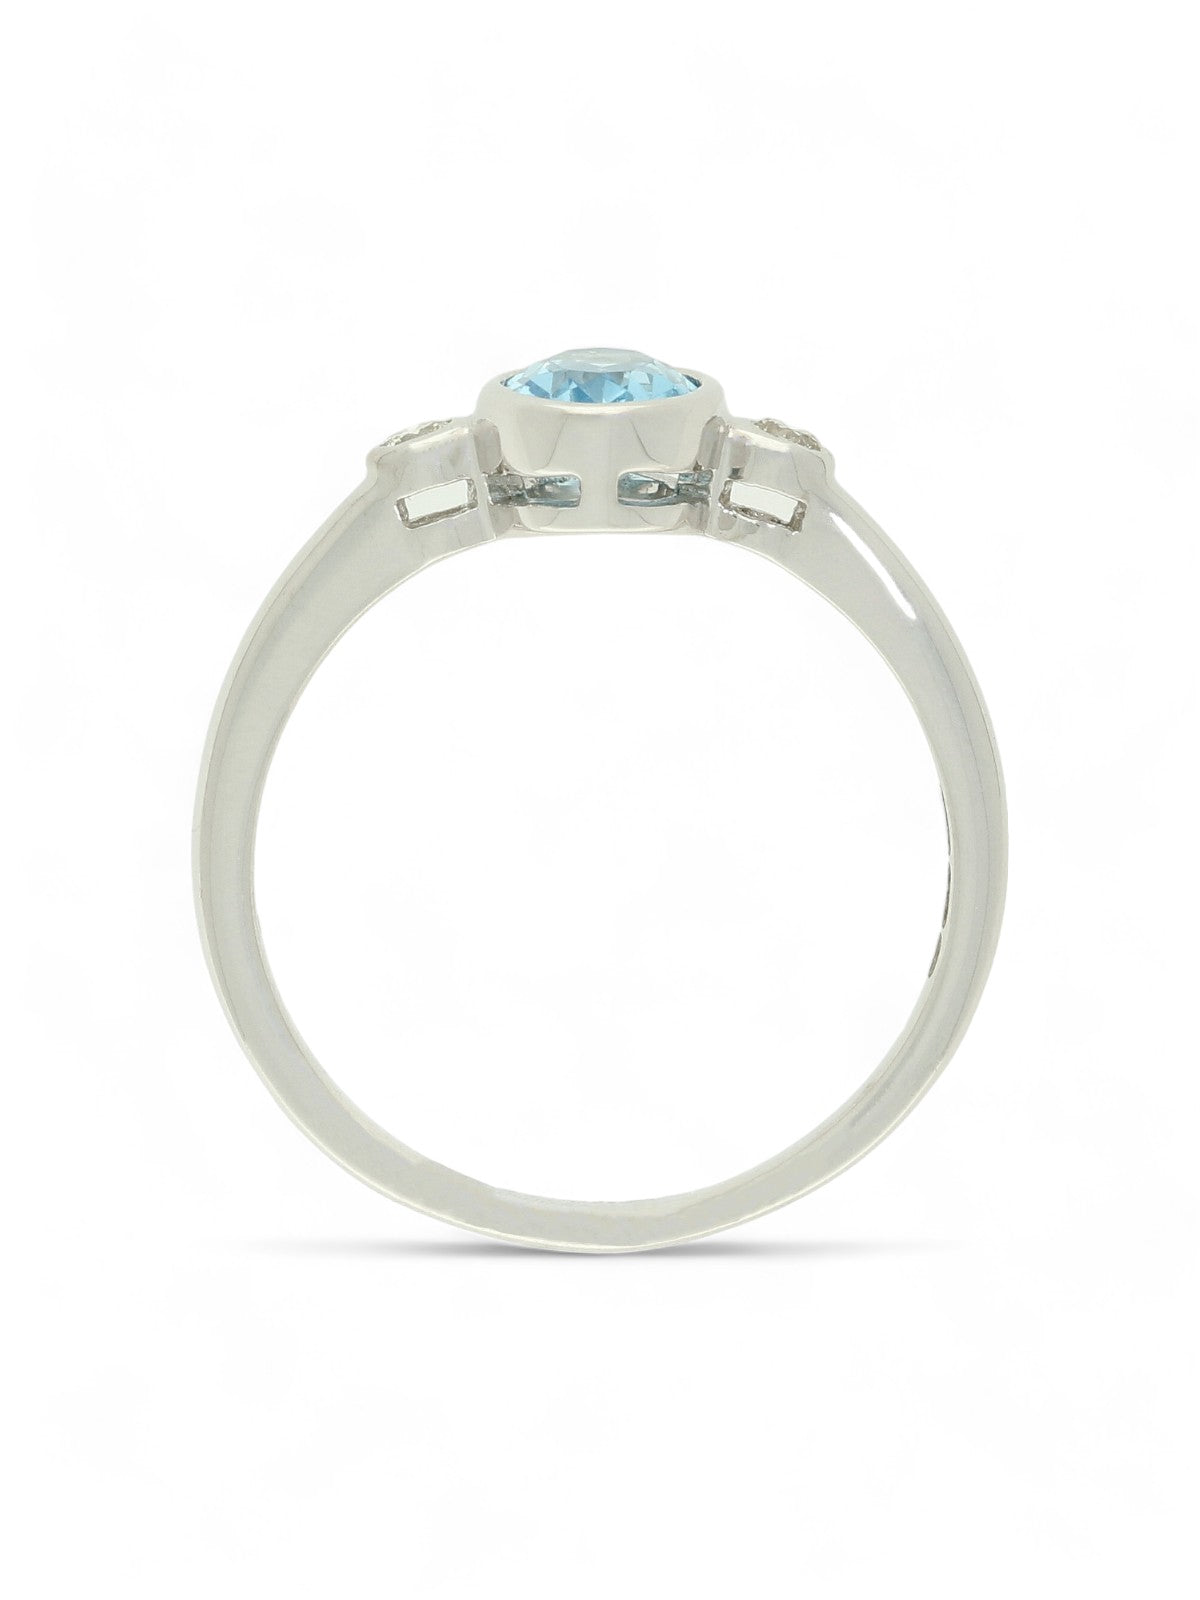 Blue Topaz & Diamond Three Stone Ring in 9ct White Gold